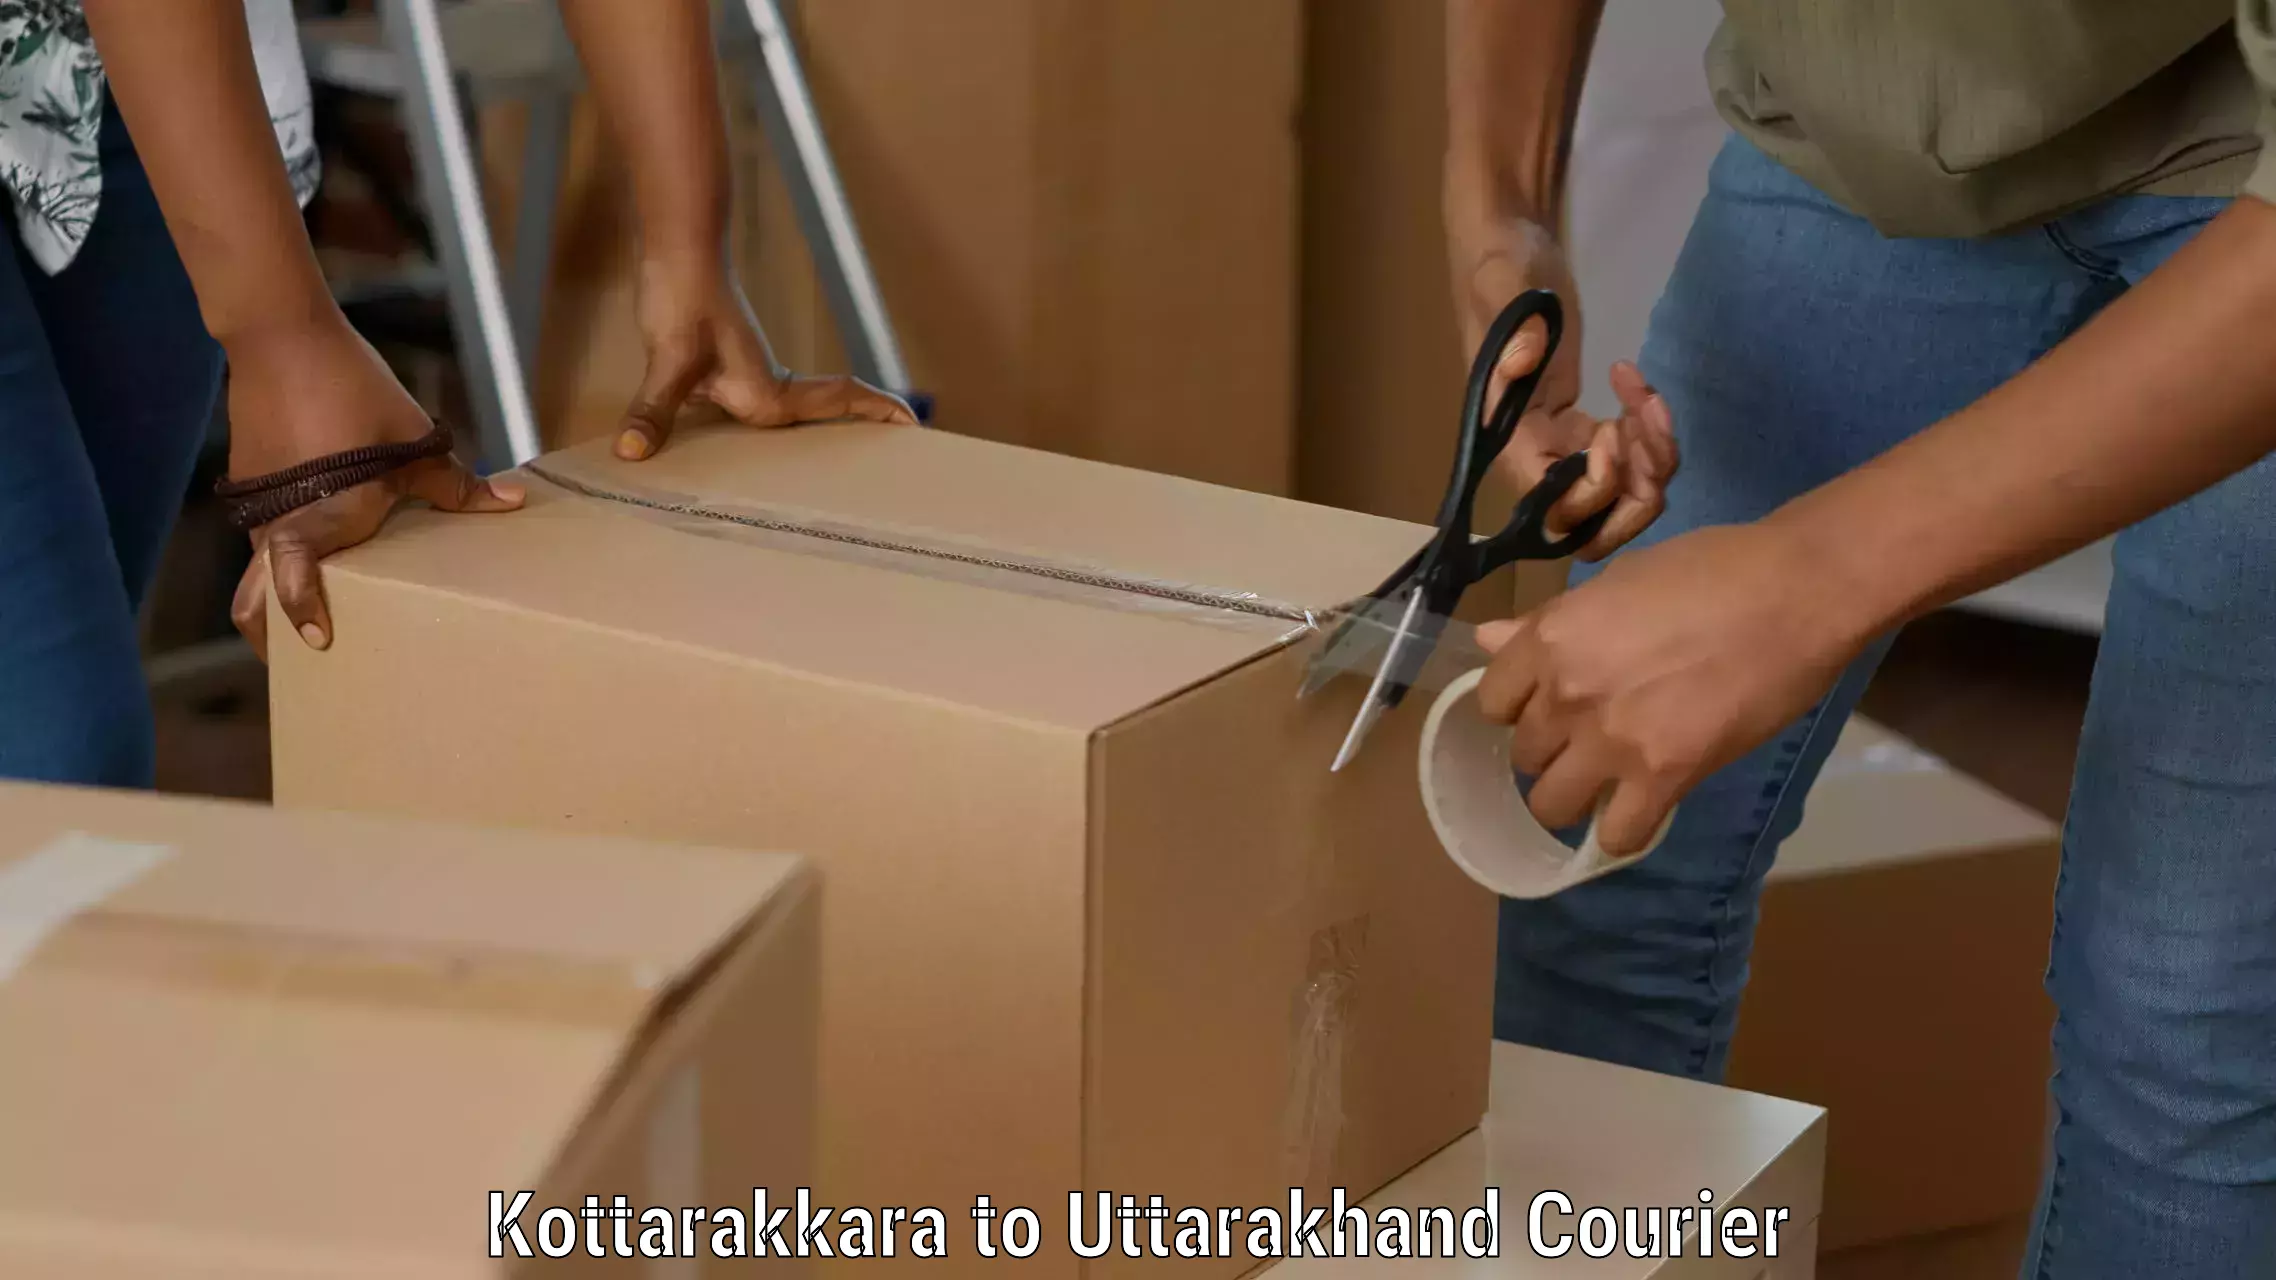 Global logistics network Kottarakkara to Uttarakhand